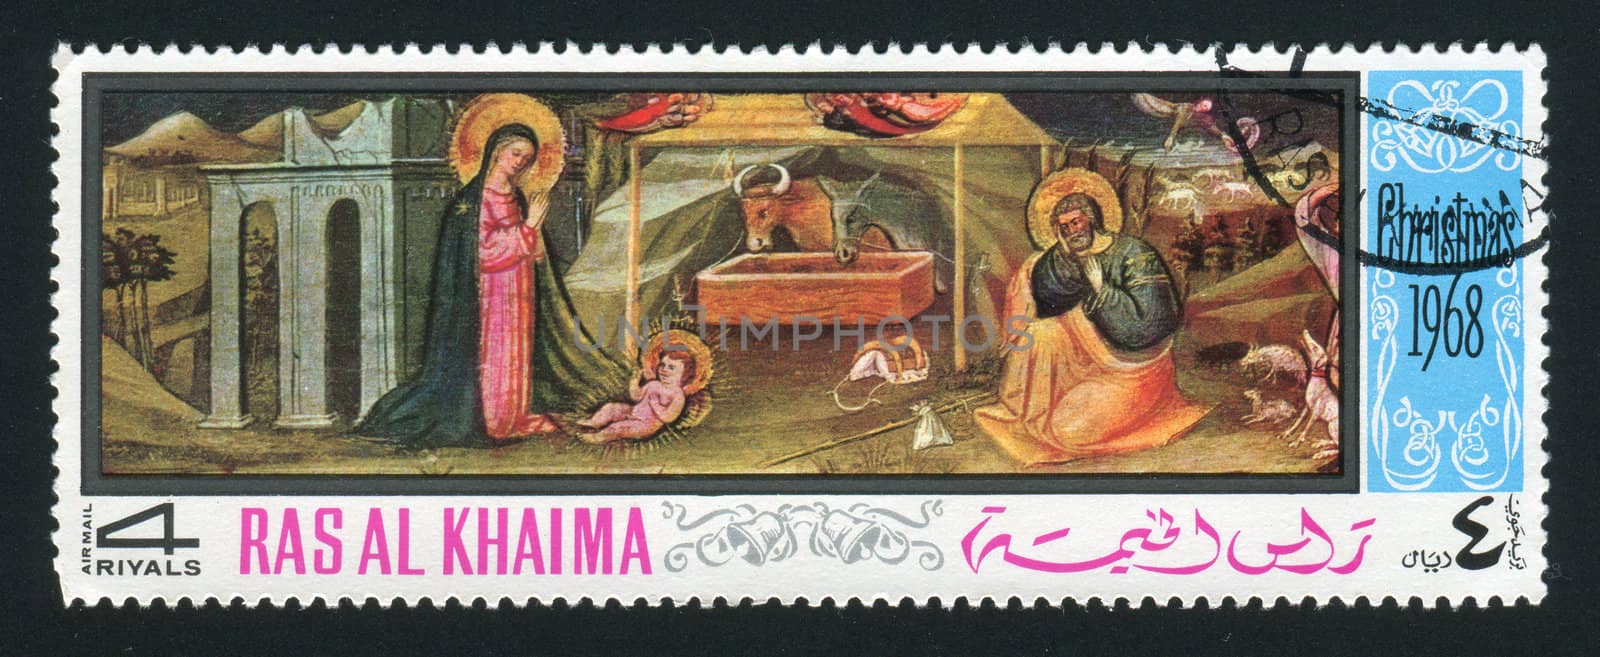 RAS AL KHAIMA - CIRCA 1968: stamp printed by Ras al Khaima, shows Picture from the bible, circa 1968.